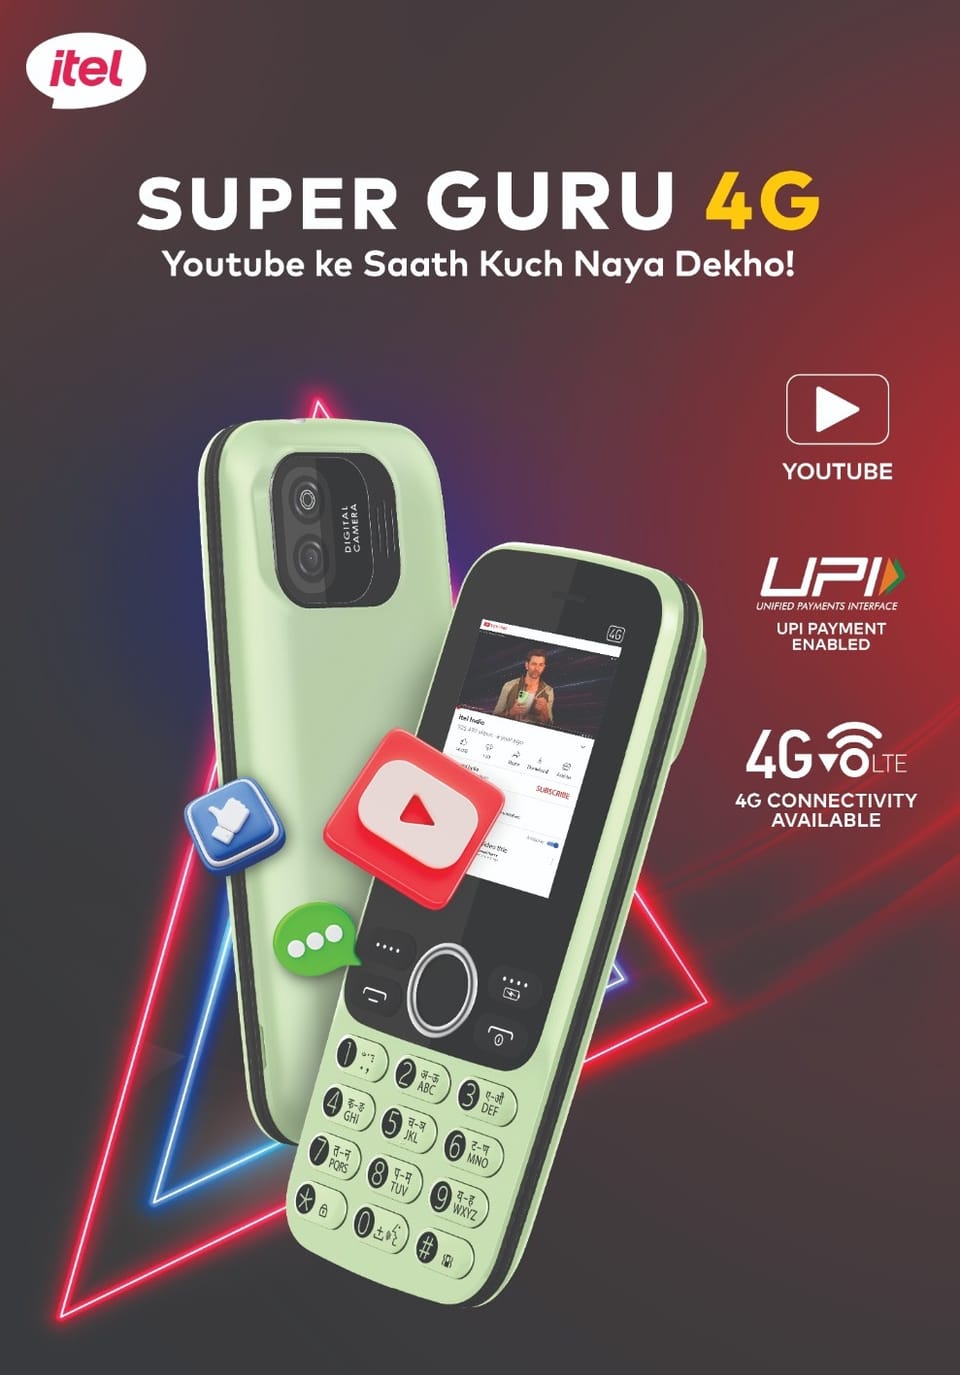 itel Super Guru 4G keypad phone launched